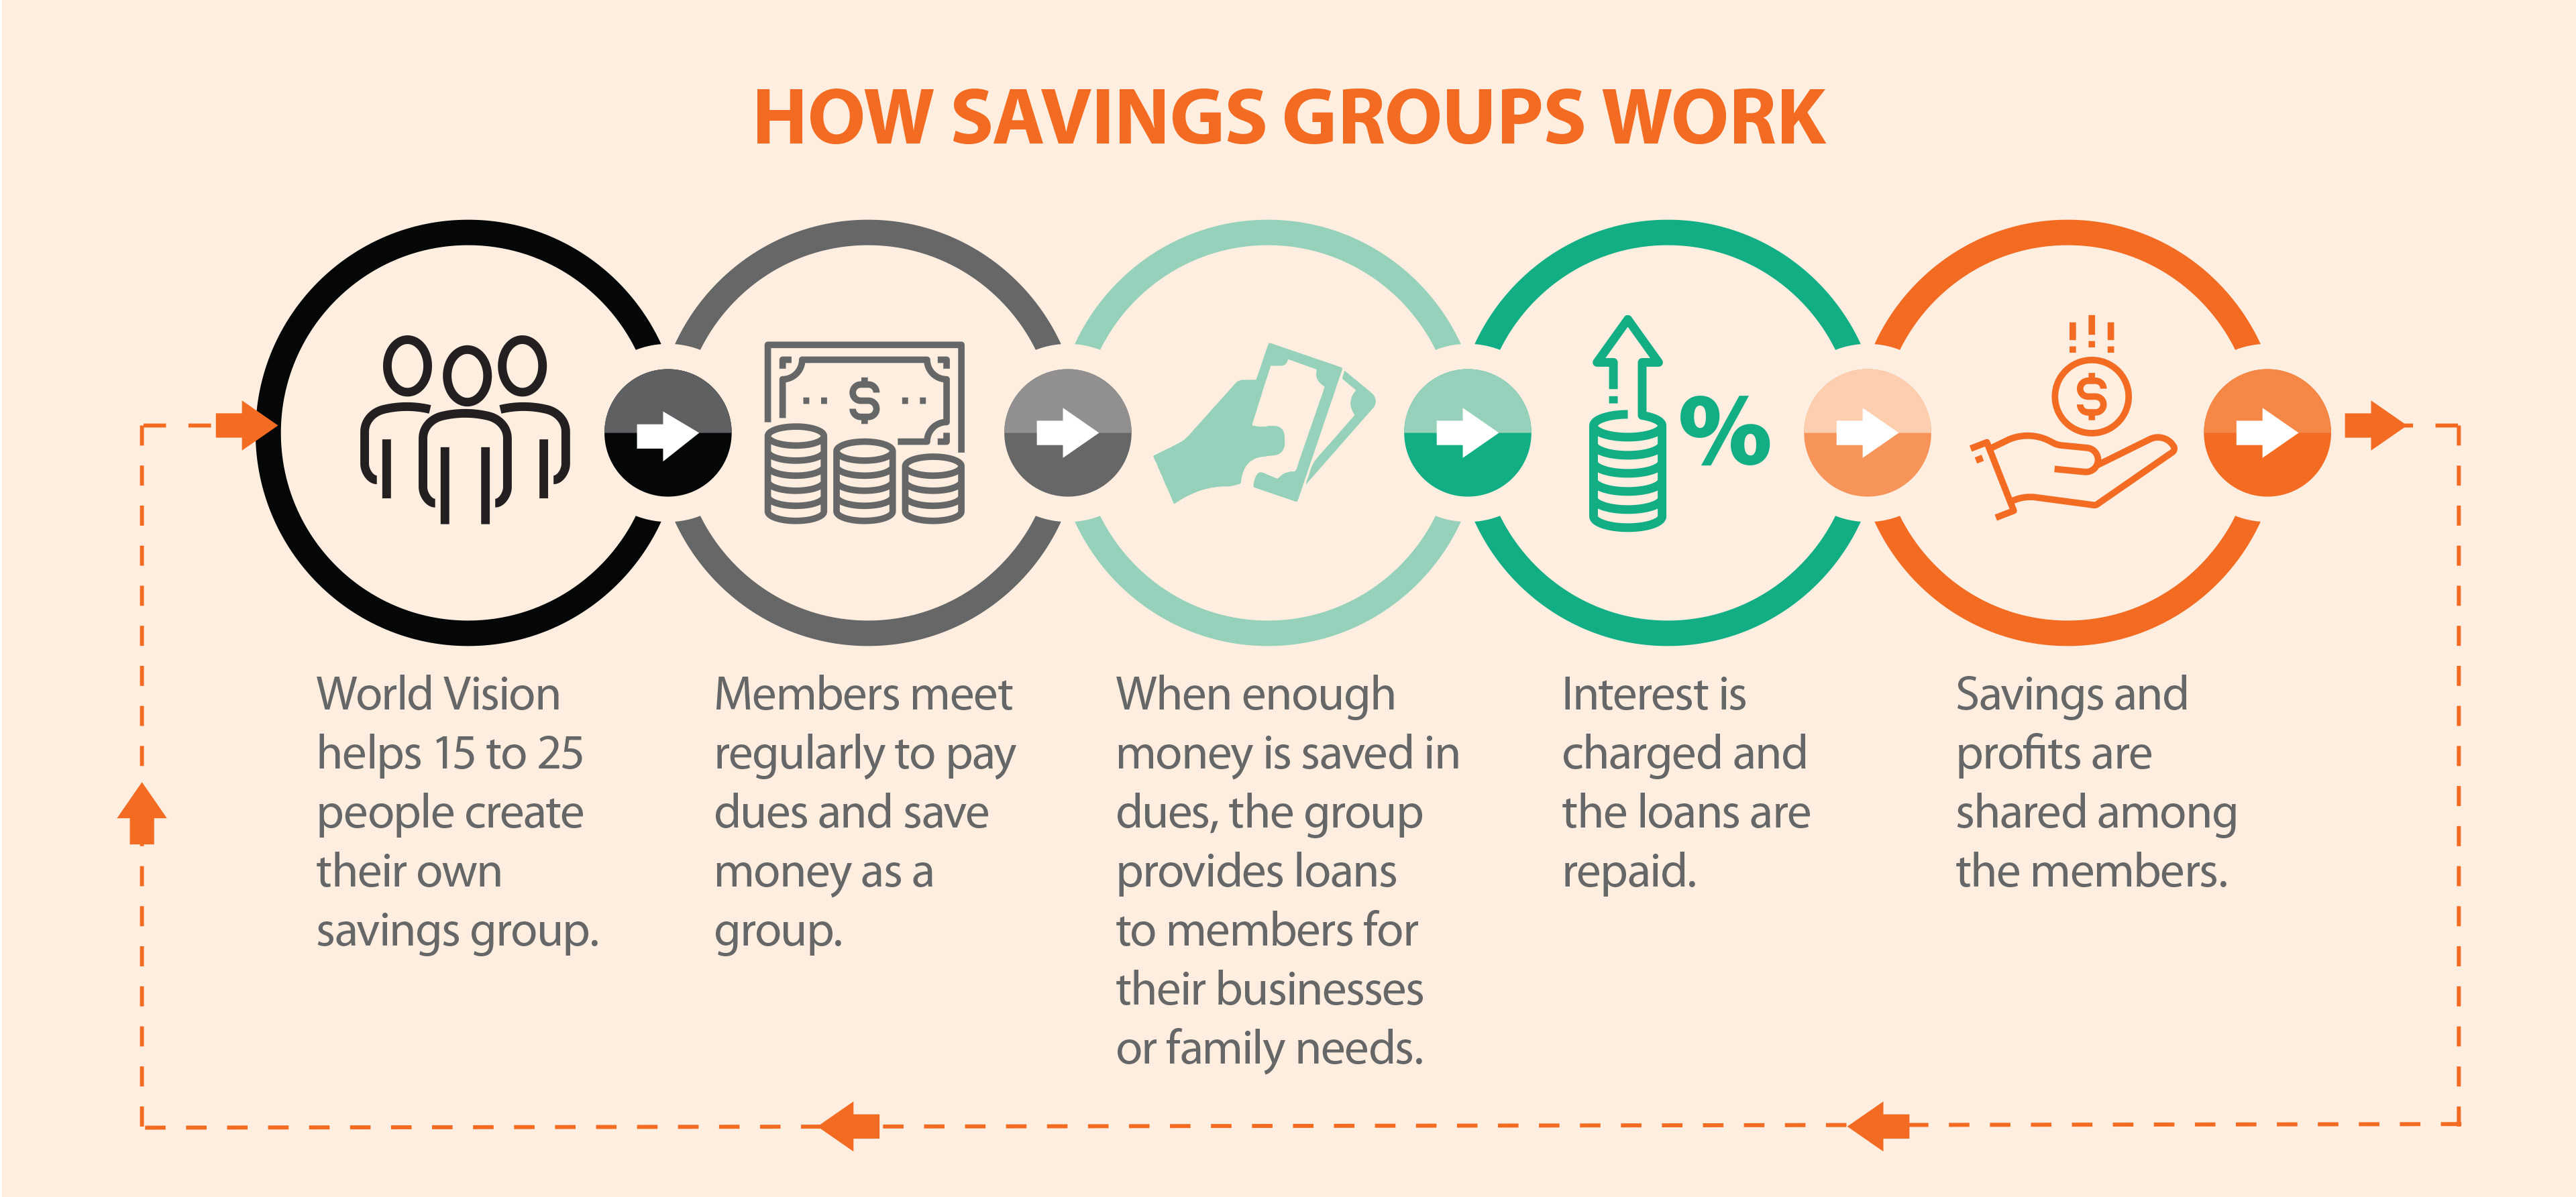 How Savings Groups Work graphic